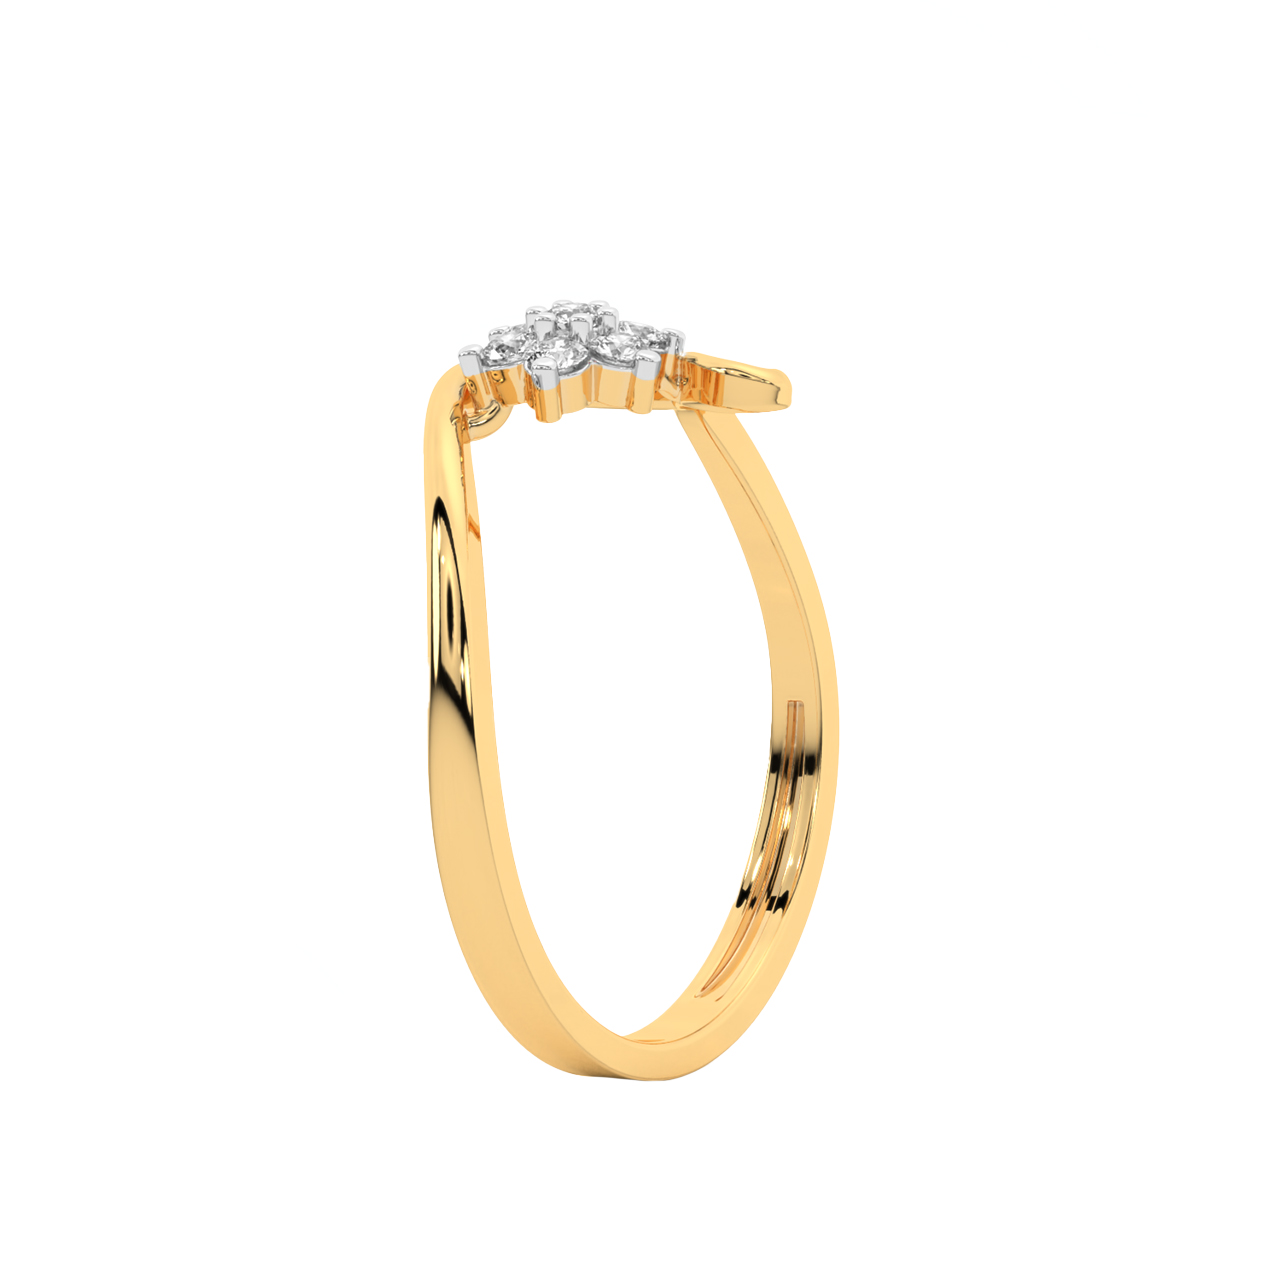 Star Design Dainty Diamond Ring